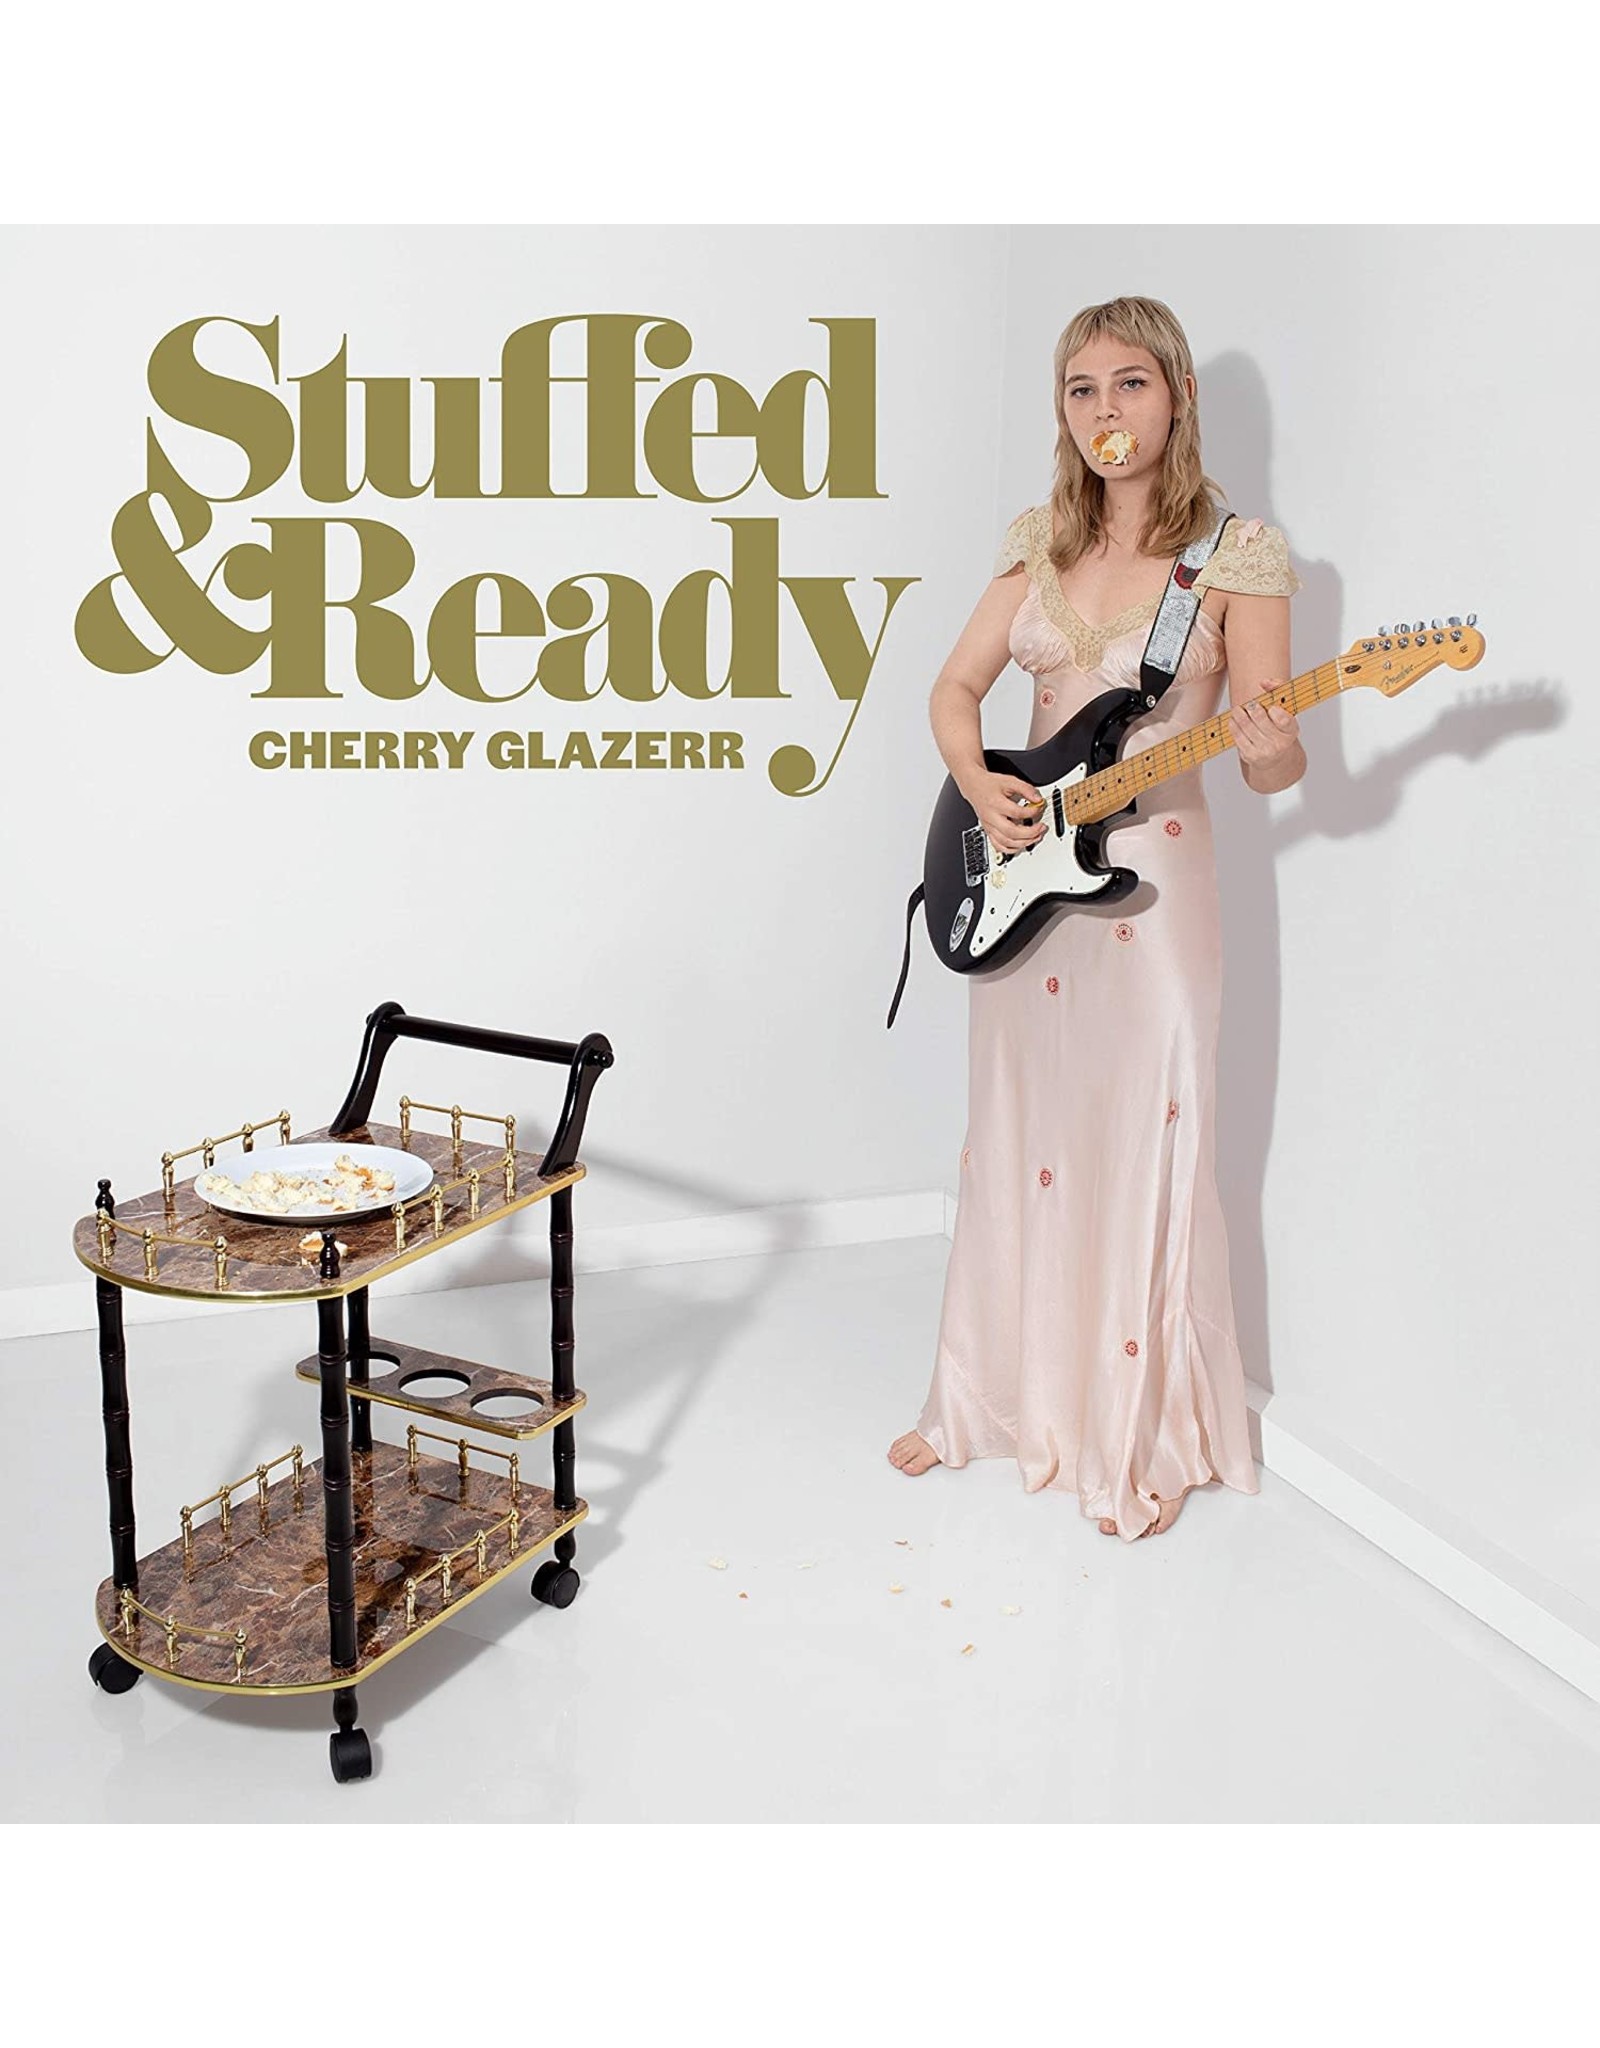 Cherry Glazerr - Stuffed & Ready (Exclusive Red Vinyl)